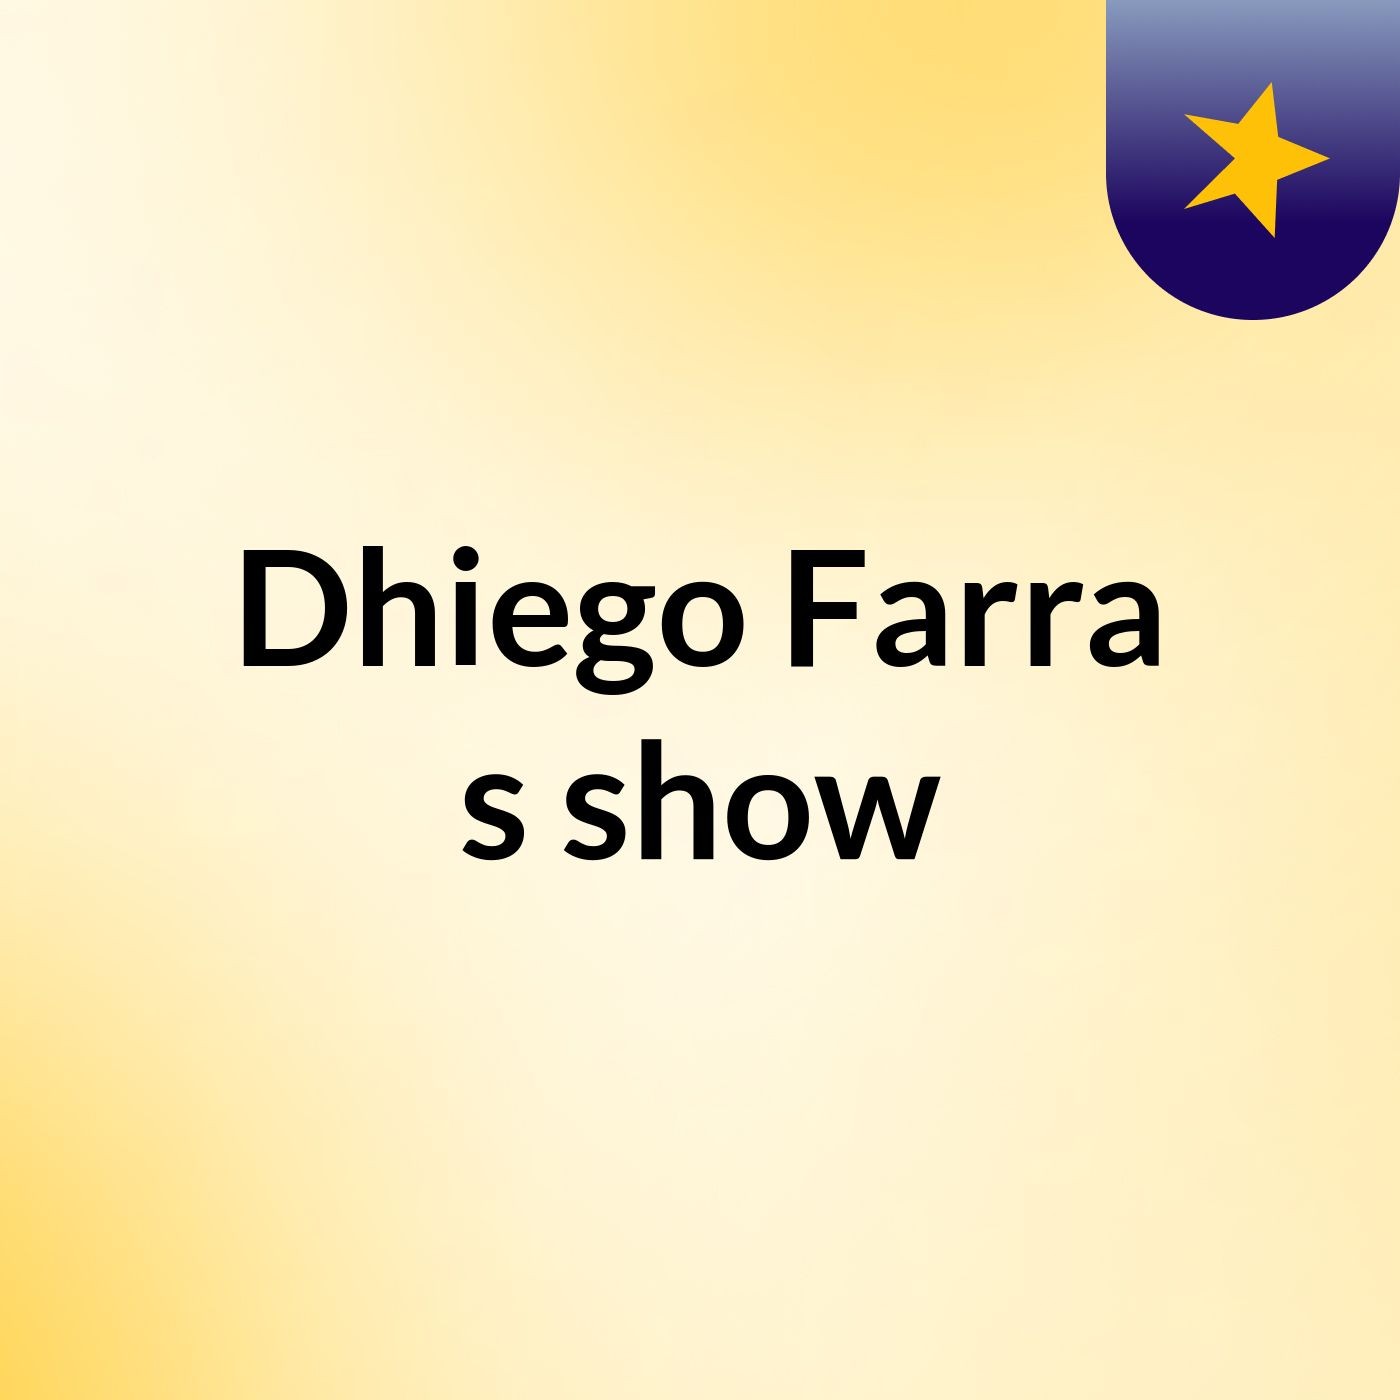 Dhiego Farra's show